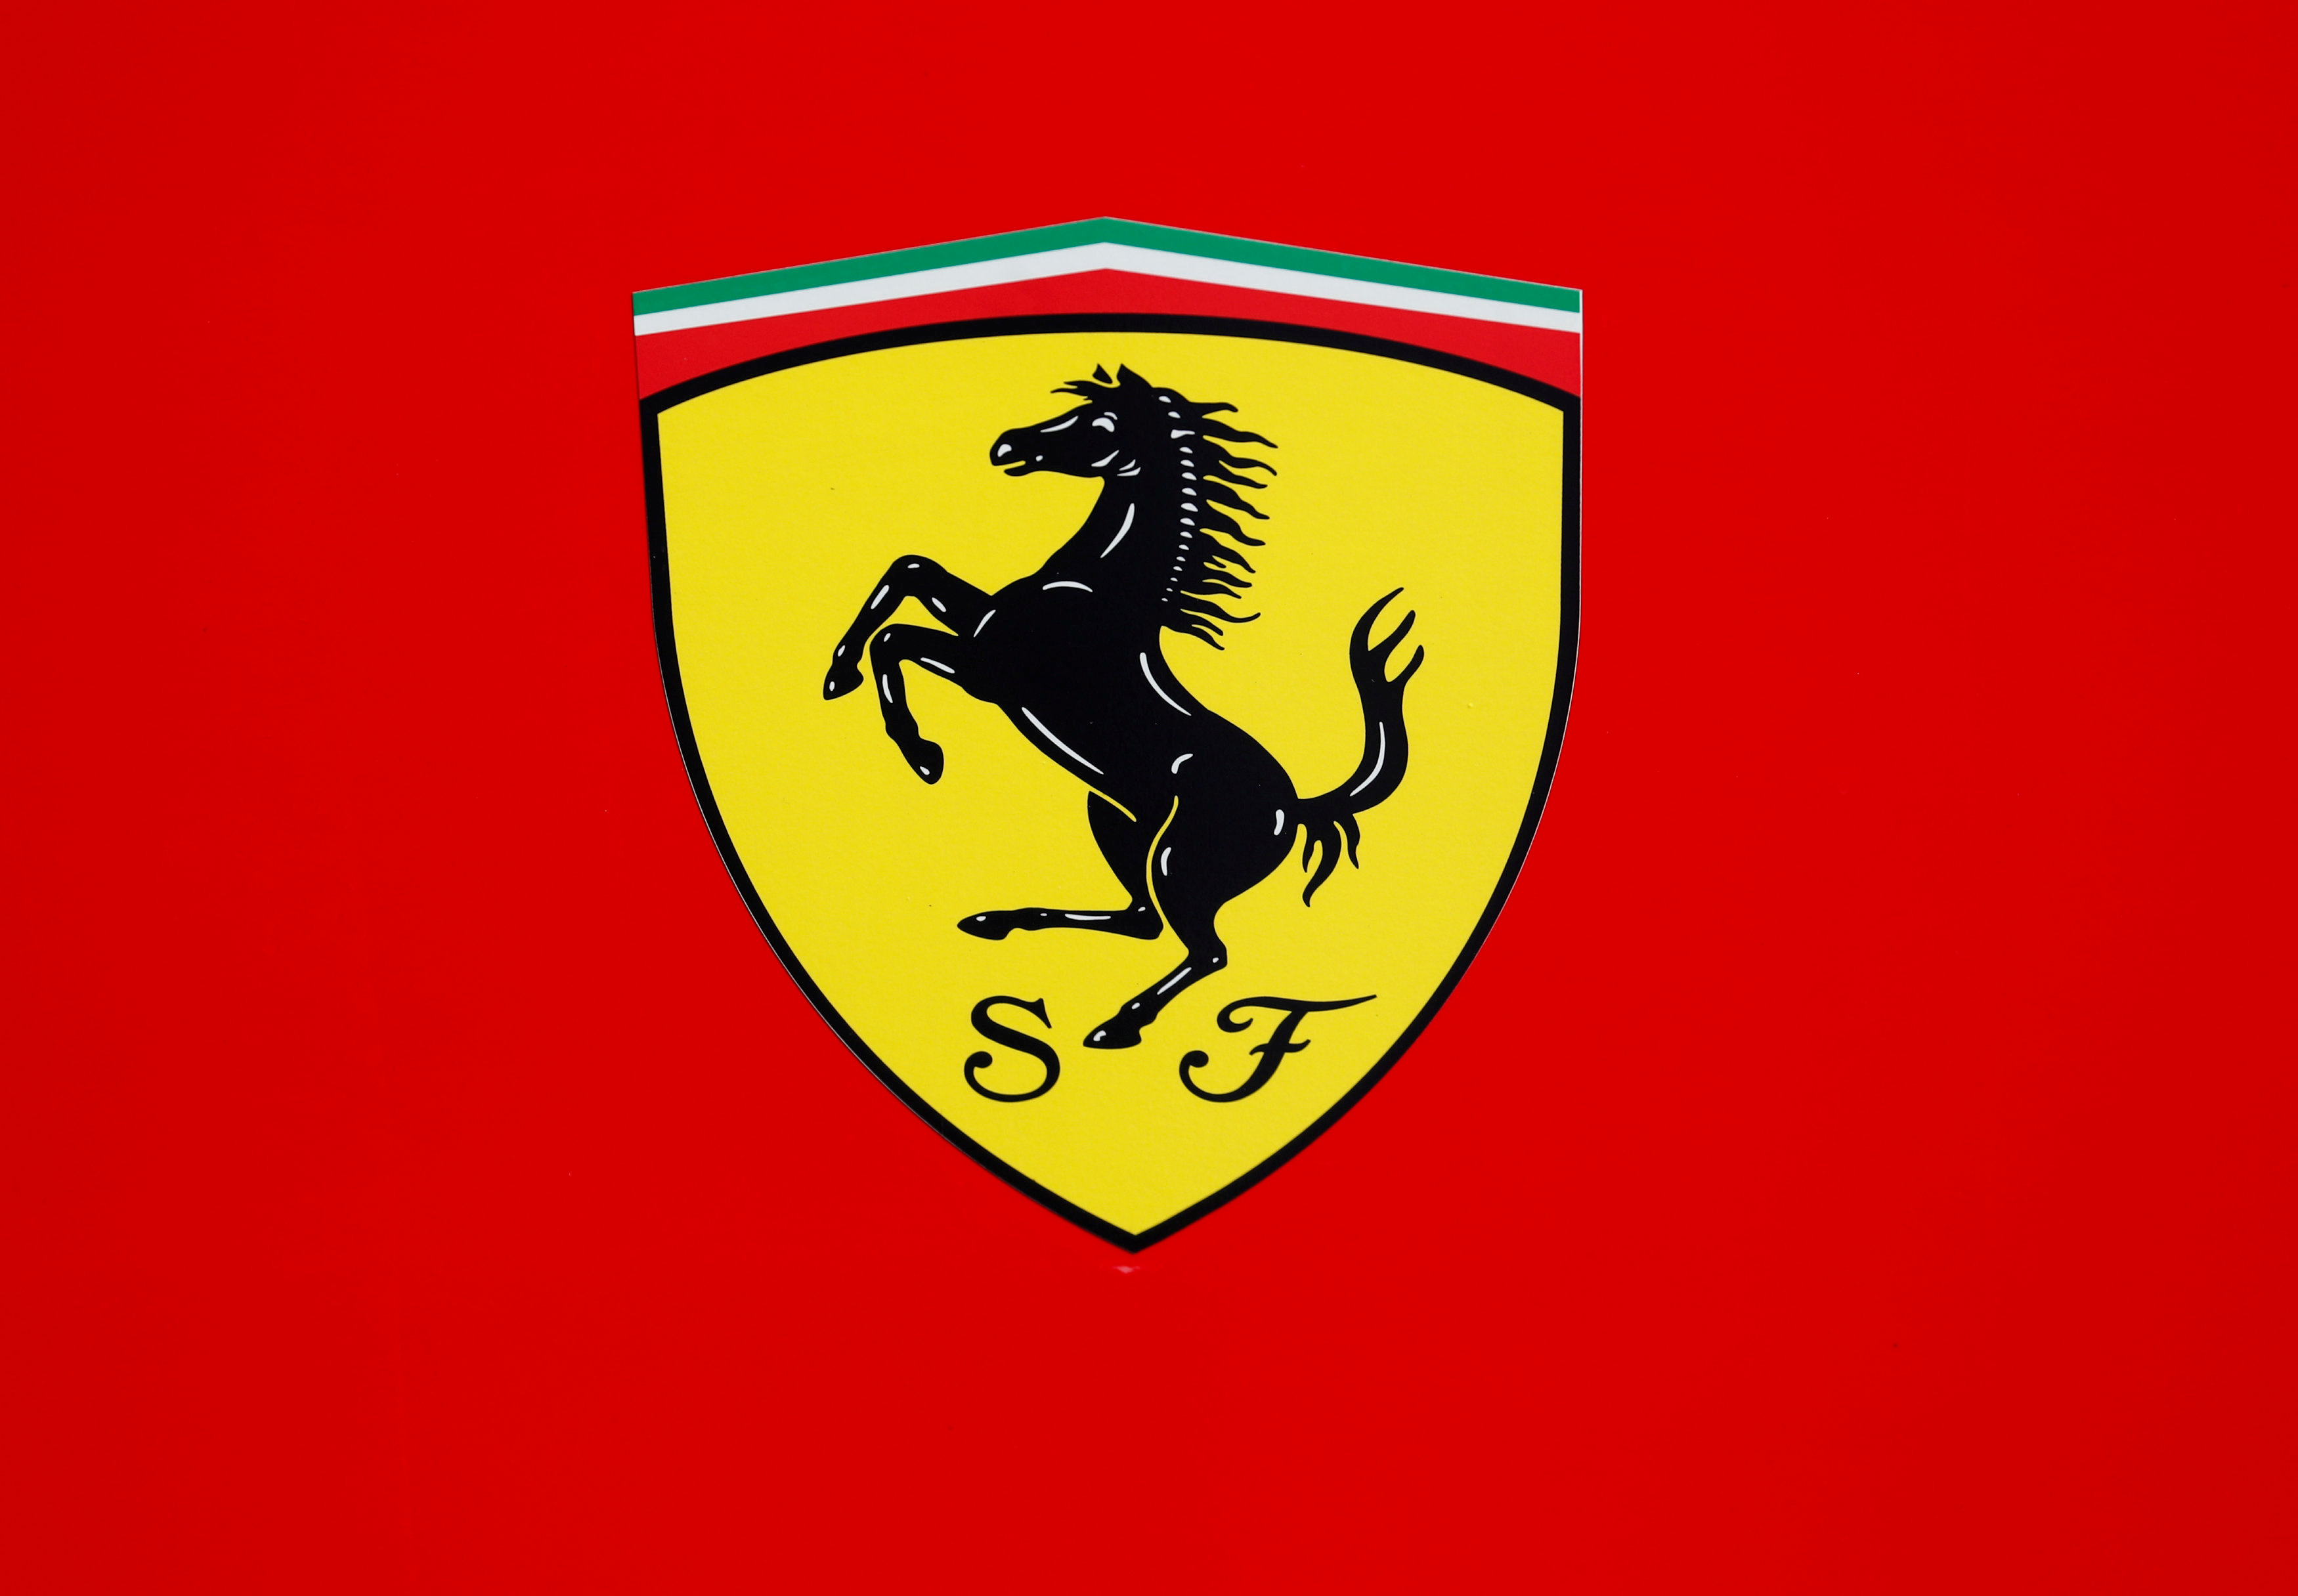 Formula One F1 - Italian Grand Prix